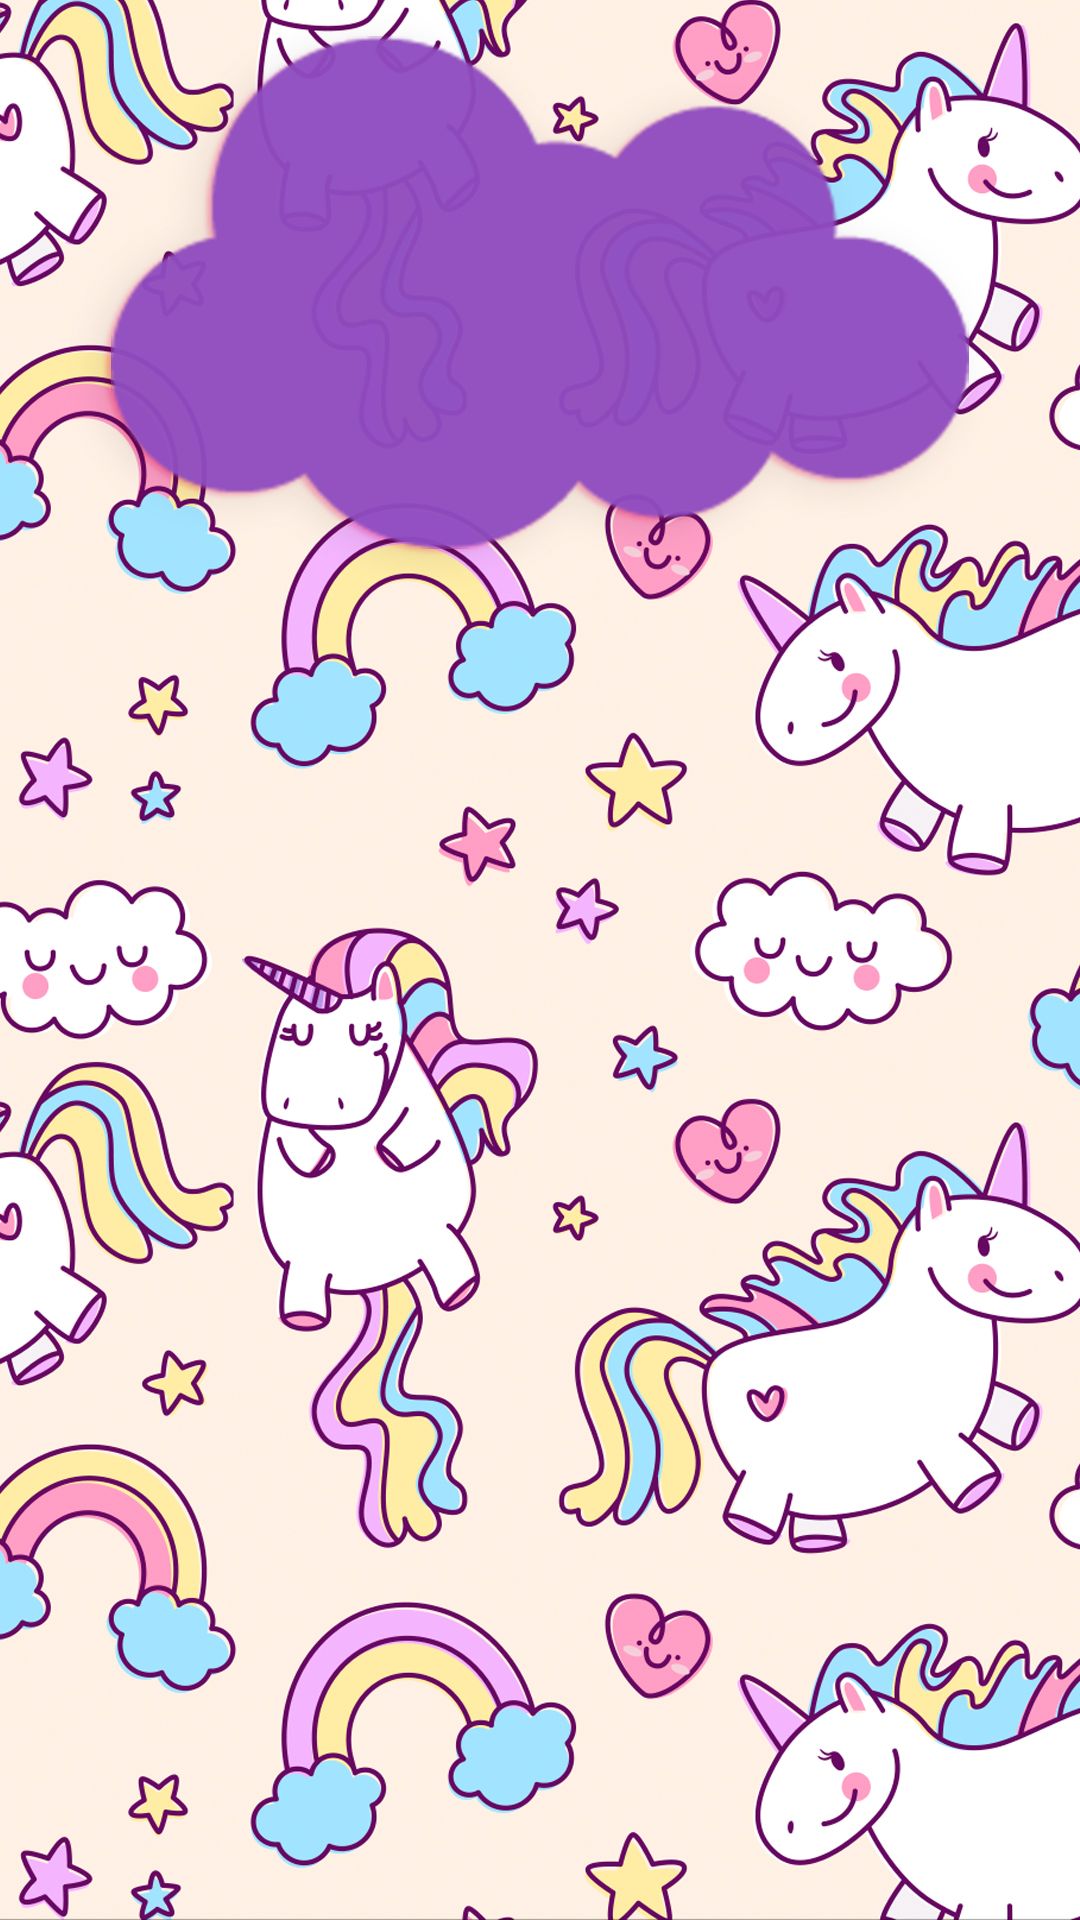 A cute unicorn pattern with clouds and stars - Unicorn